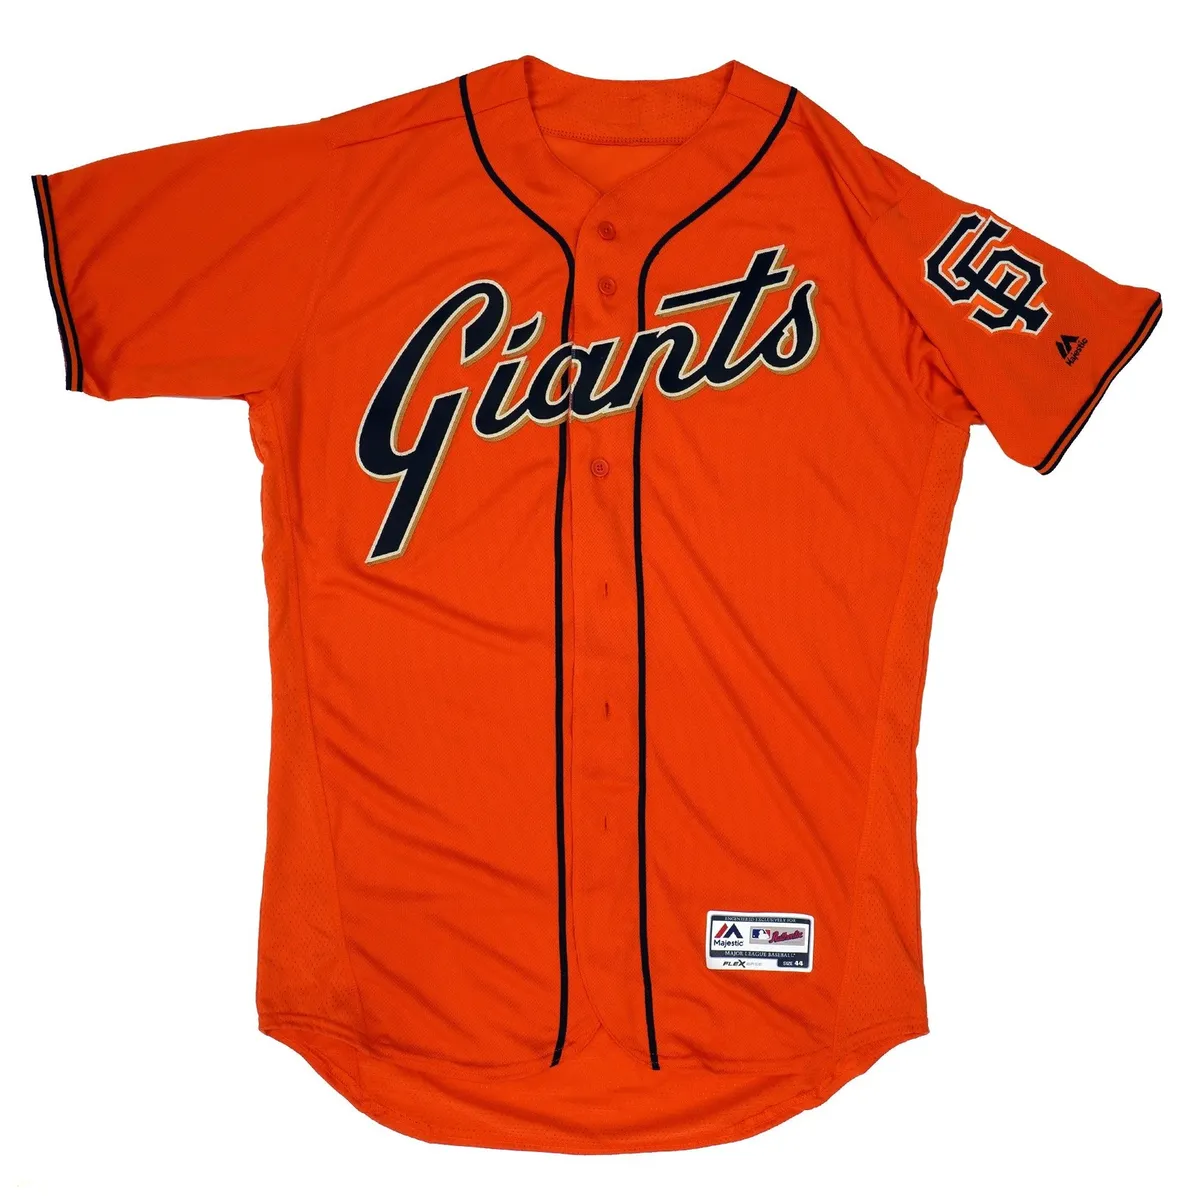 Mens MLB SF Giants Authentic On Field Flex Base Jersey - Orange